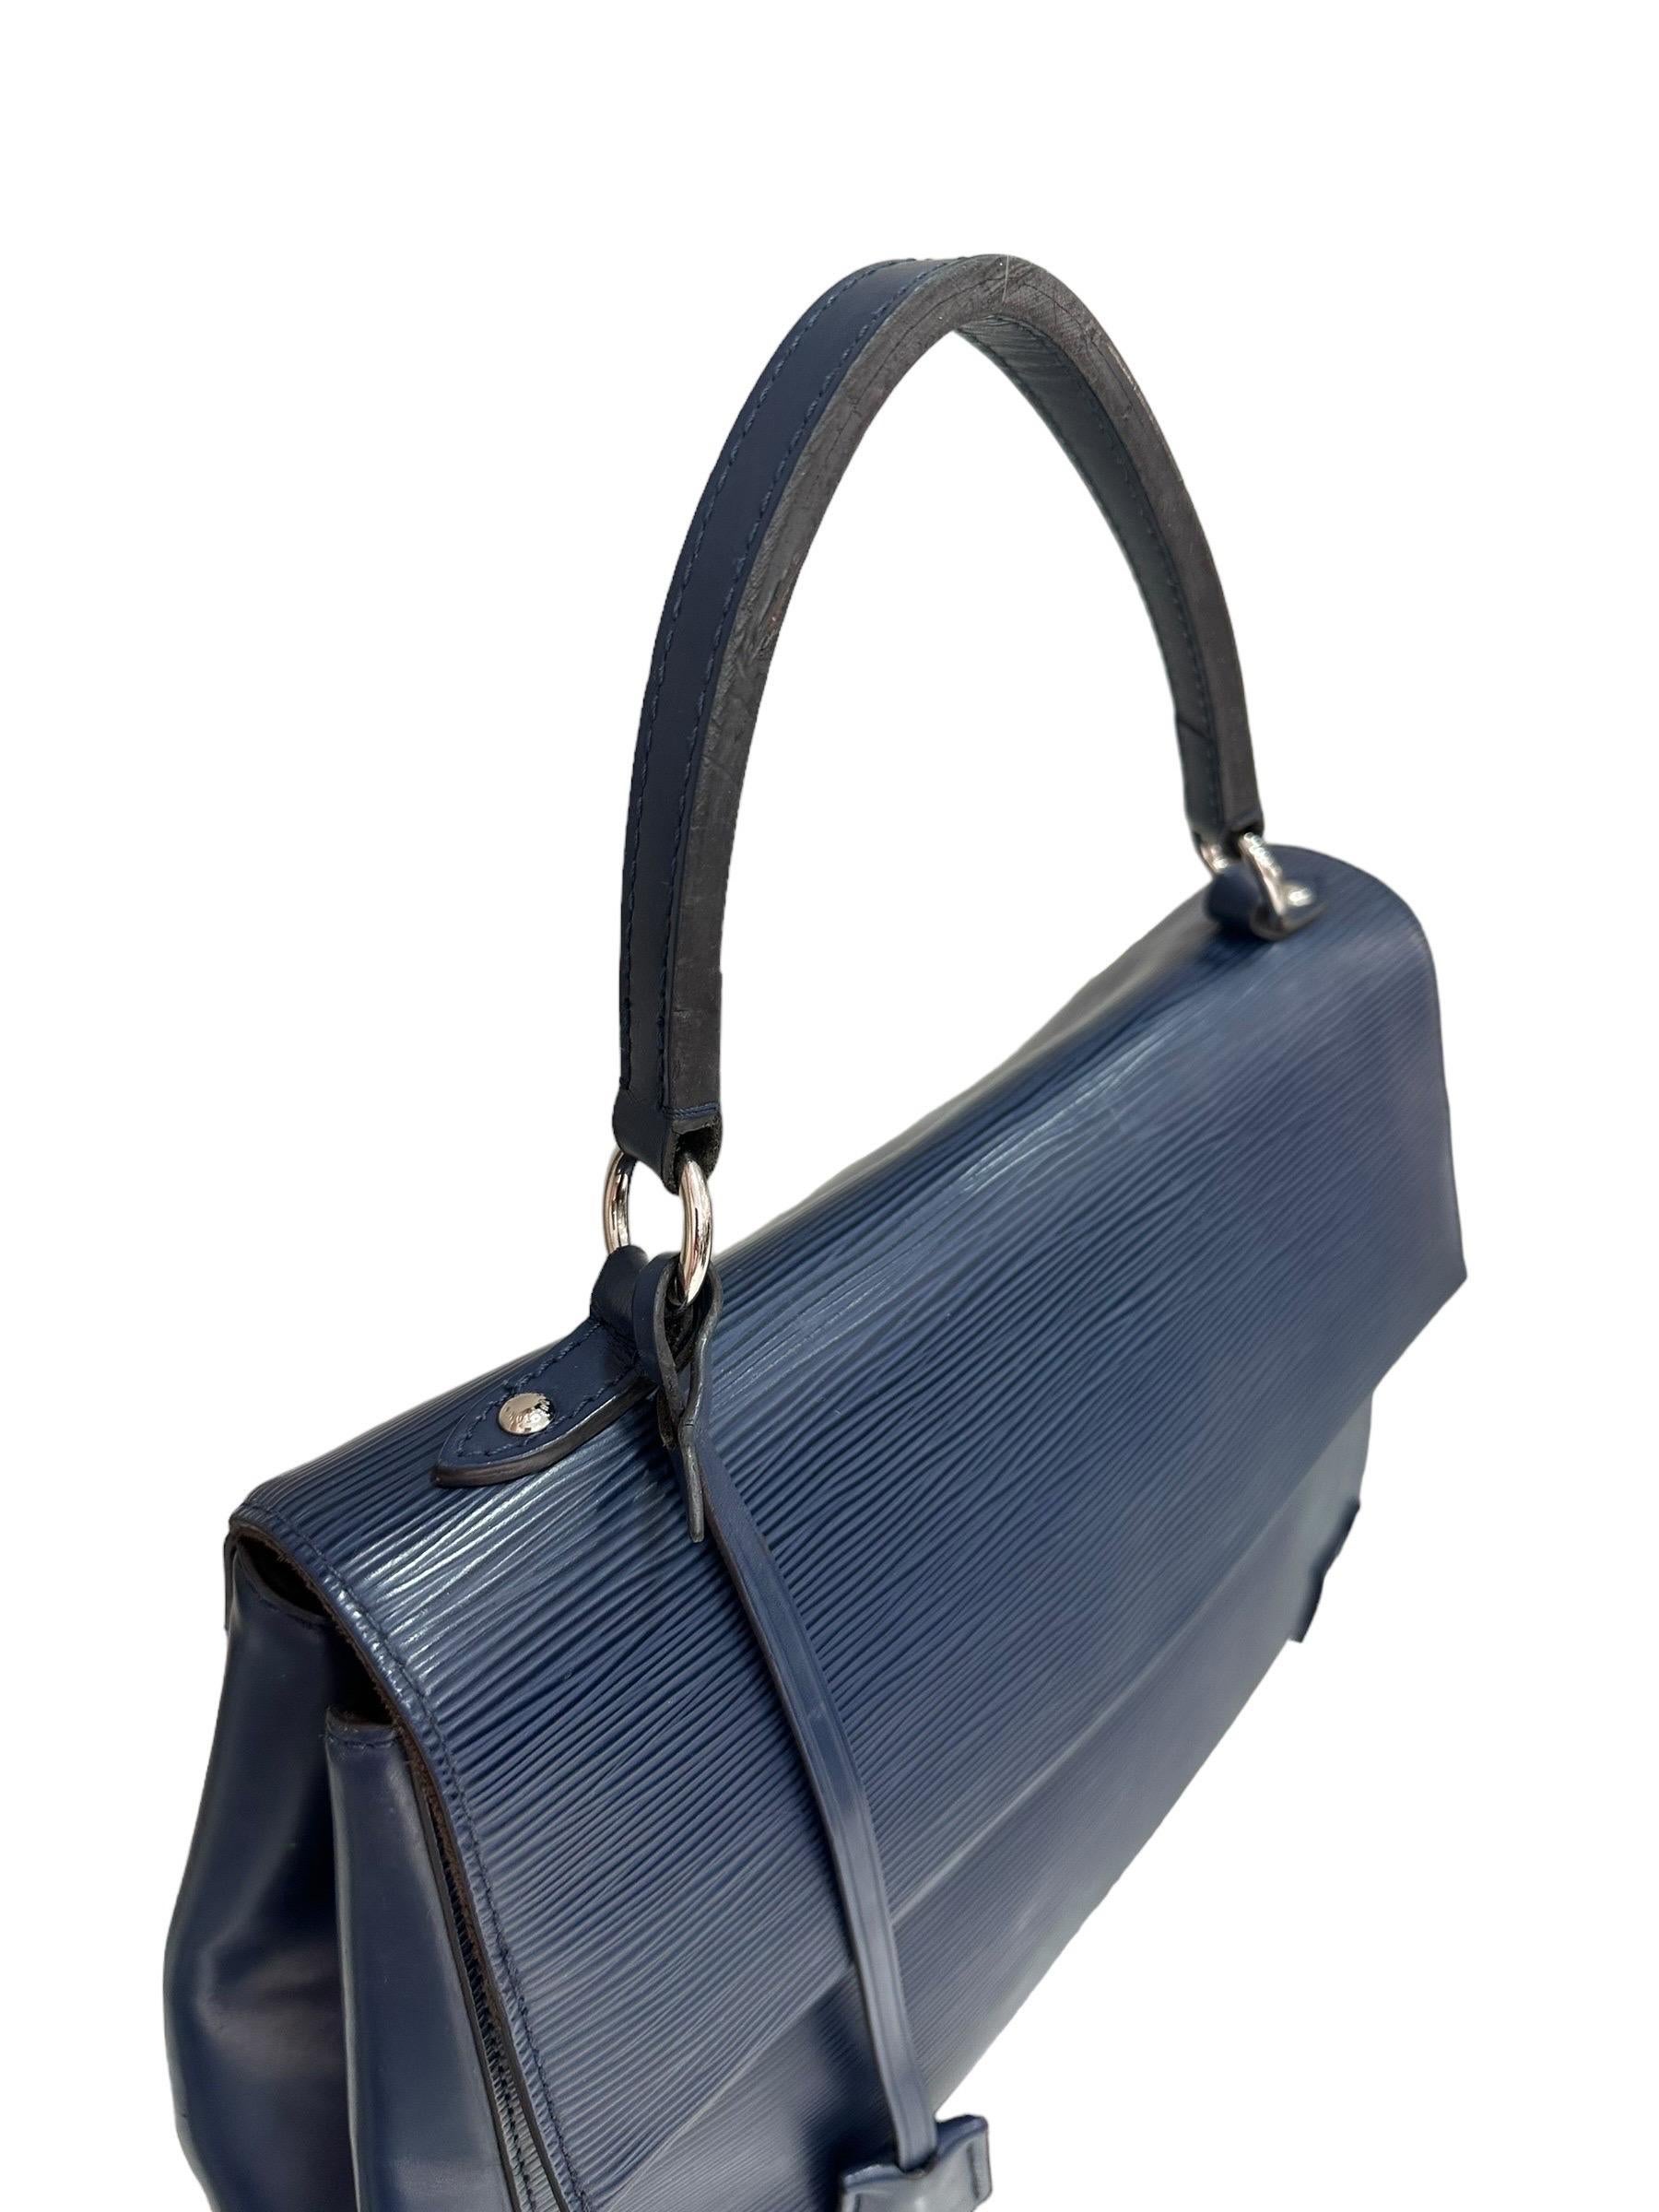 Borsa firmata Louis Vuitton, modello Cluny, misura MM, realizzata in pelle Epi blu e hardware color argento. Doté d'une patte riche avec fond calamiteux, il présente le logo 